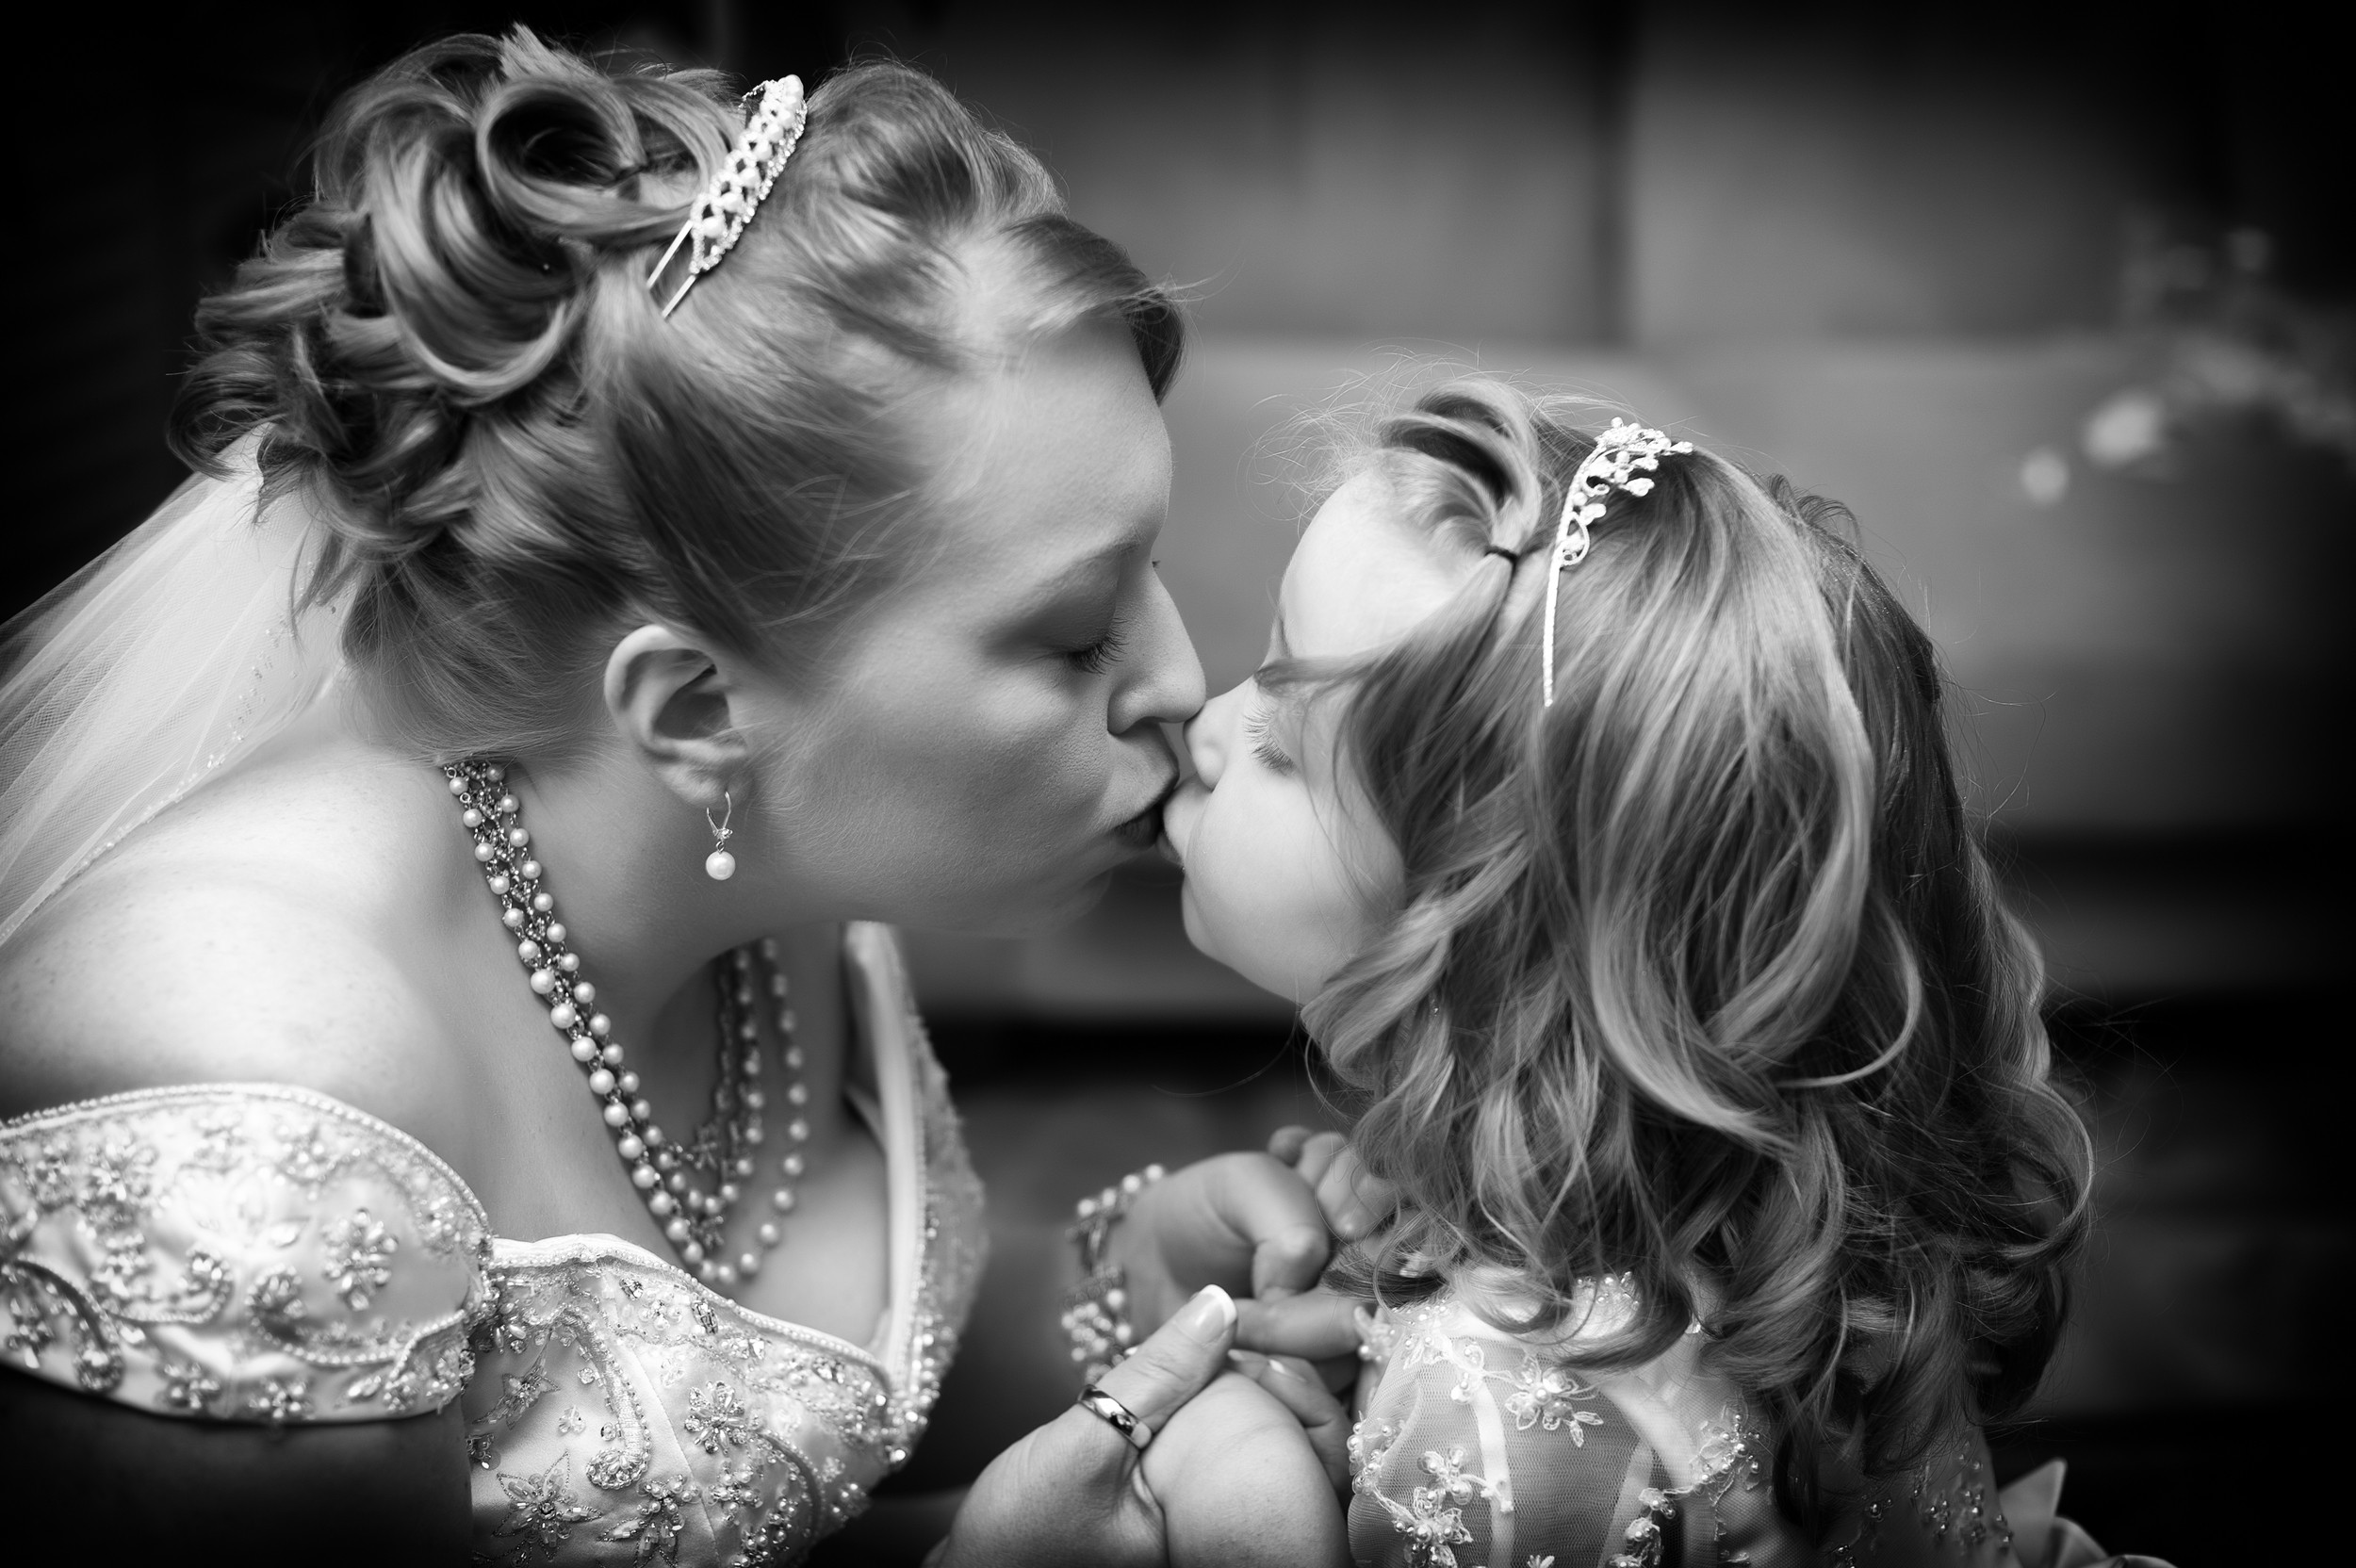 A Bride Kisses her Daughter the Flower girl on her wedding day, Kenneth Light Studios - Peter Farrar